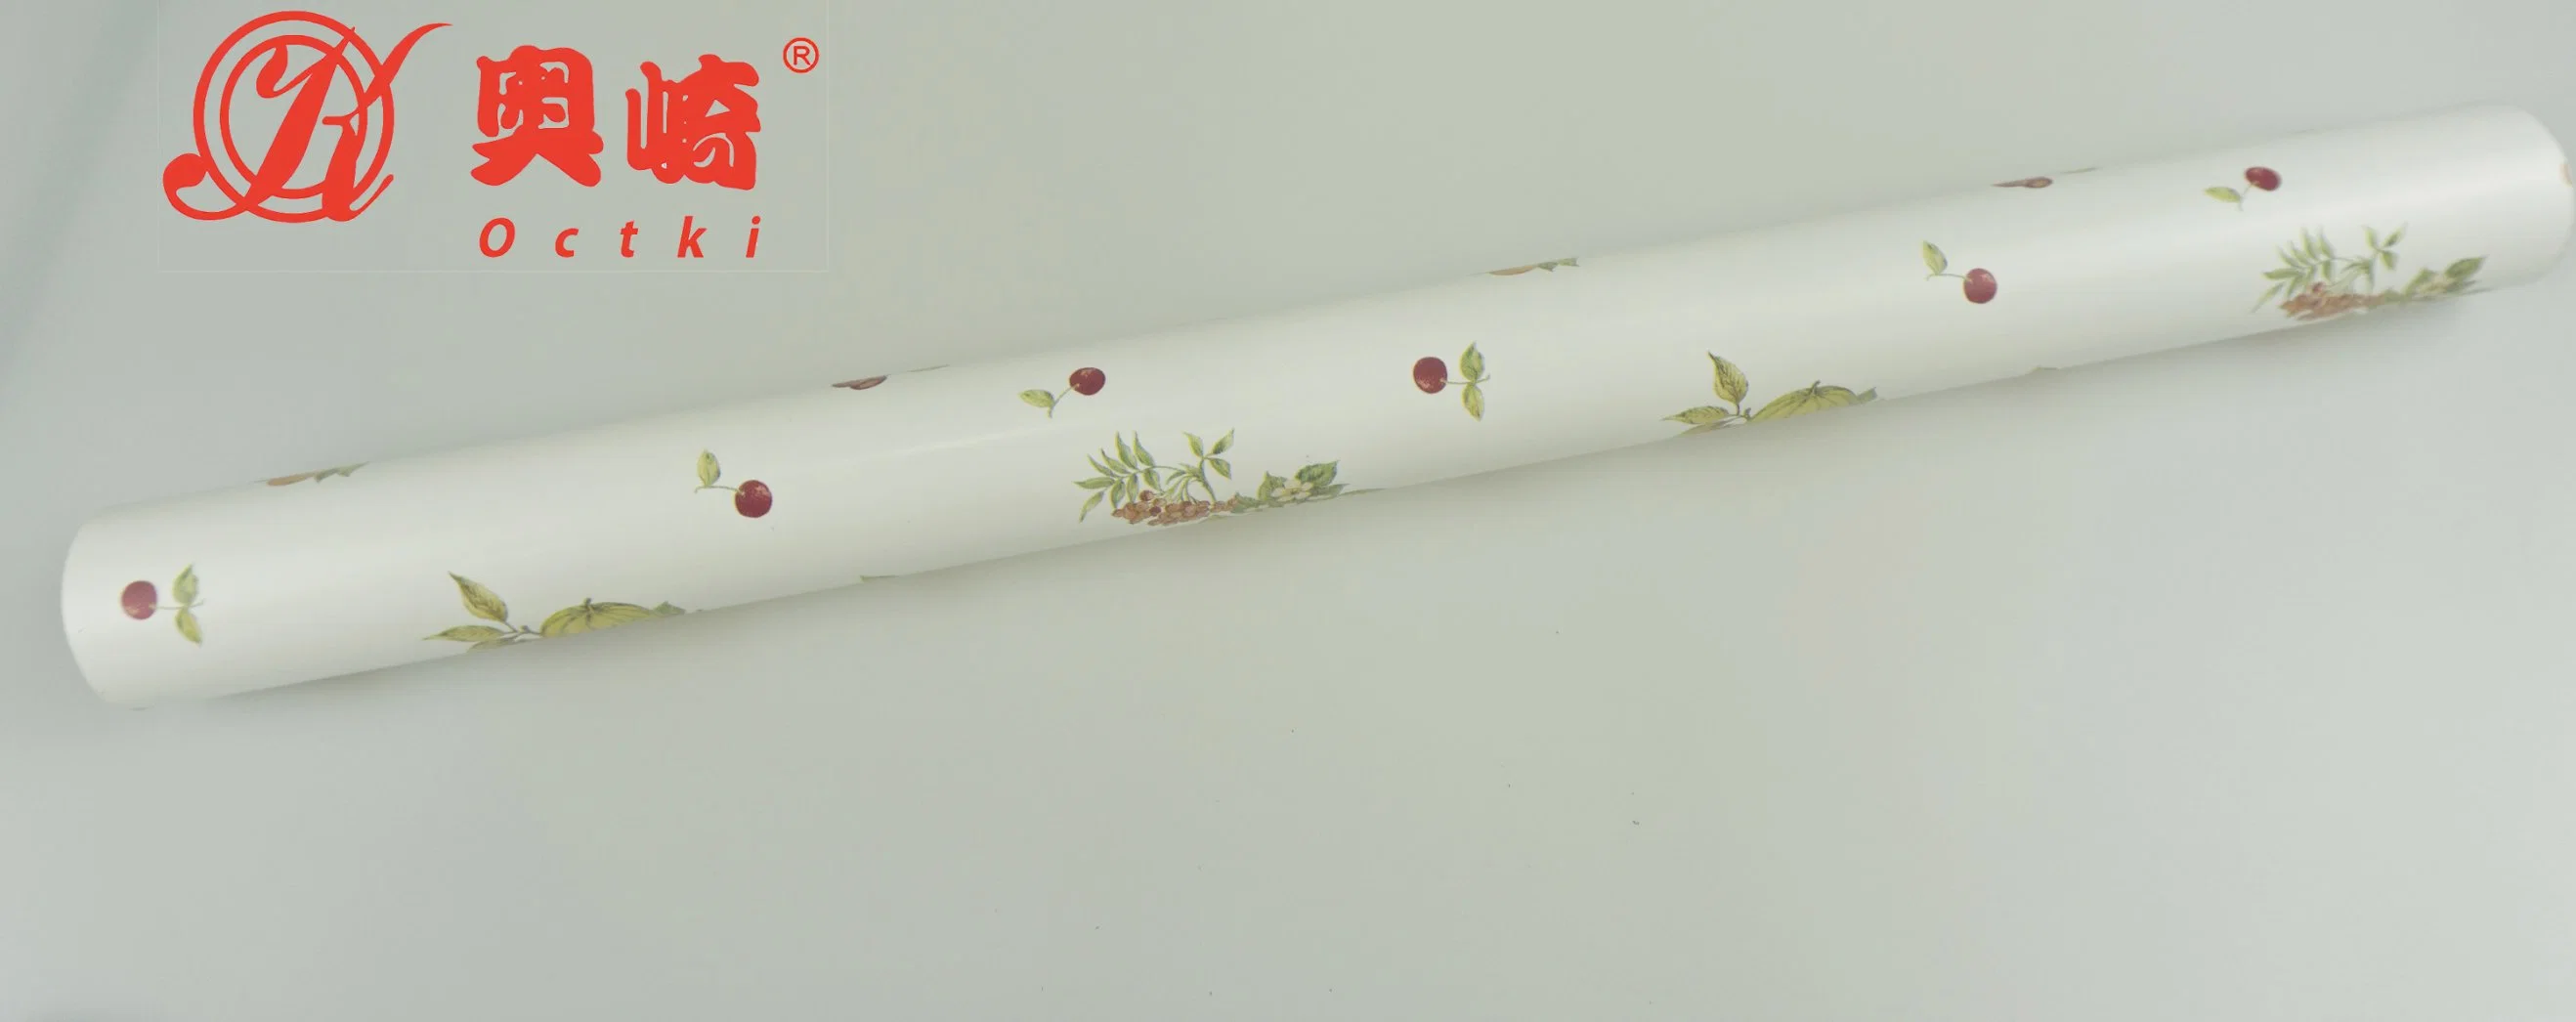 Octki Waterproof Elegant Fruits Printing PVC Self-Adhesive Bright Floral Wallpaper Desktop Background Decoration